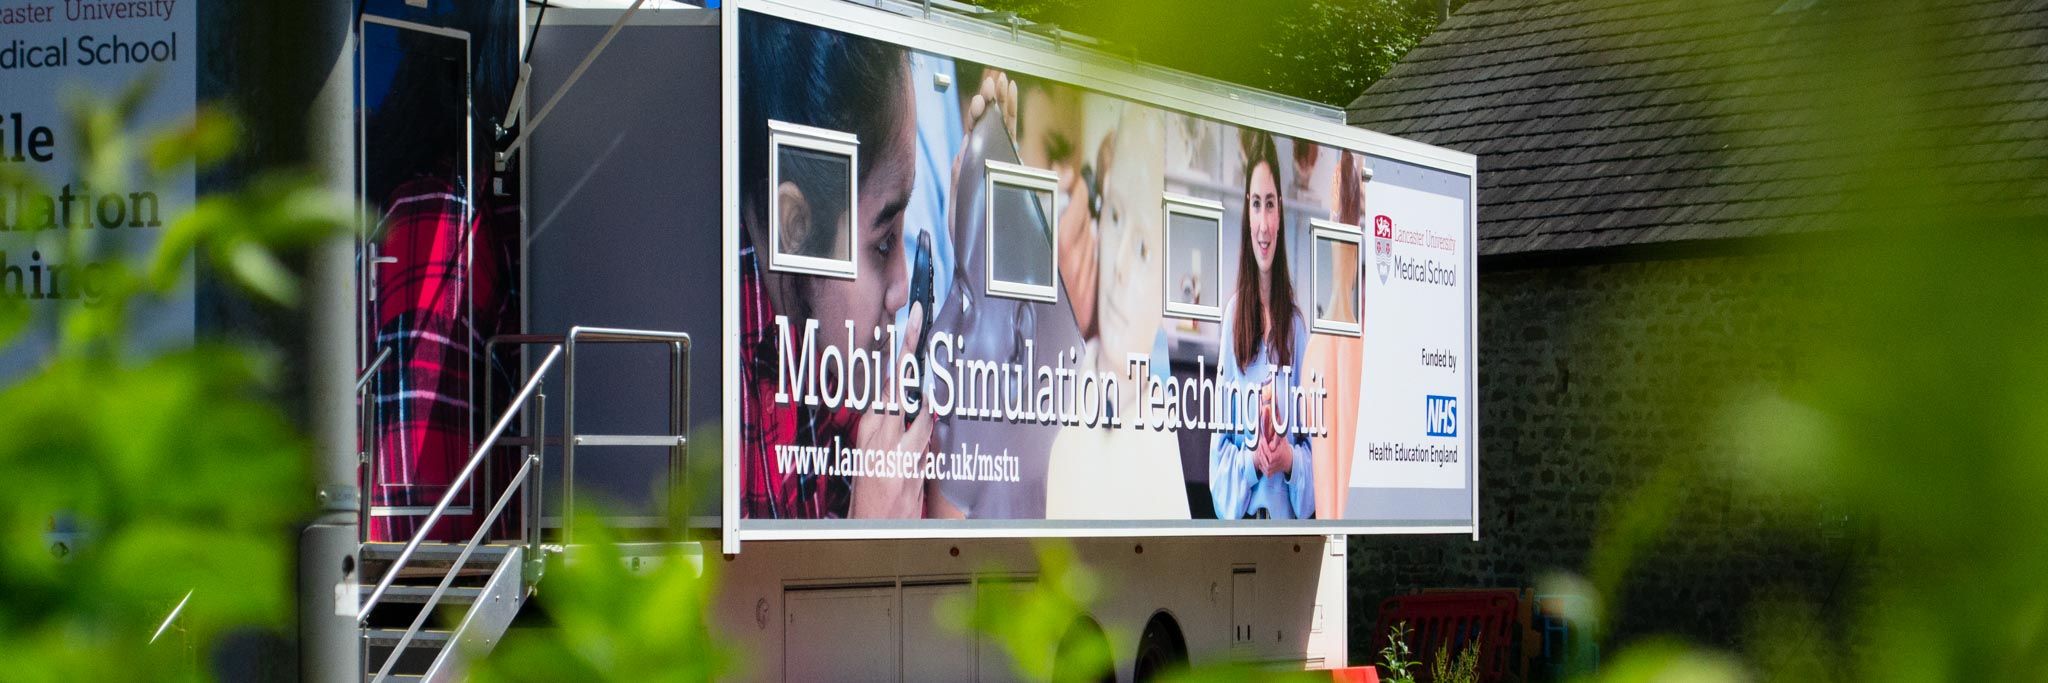 The Mobile Simulation Teaching Unit 